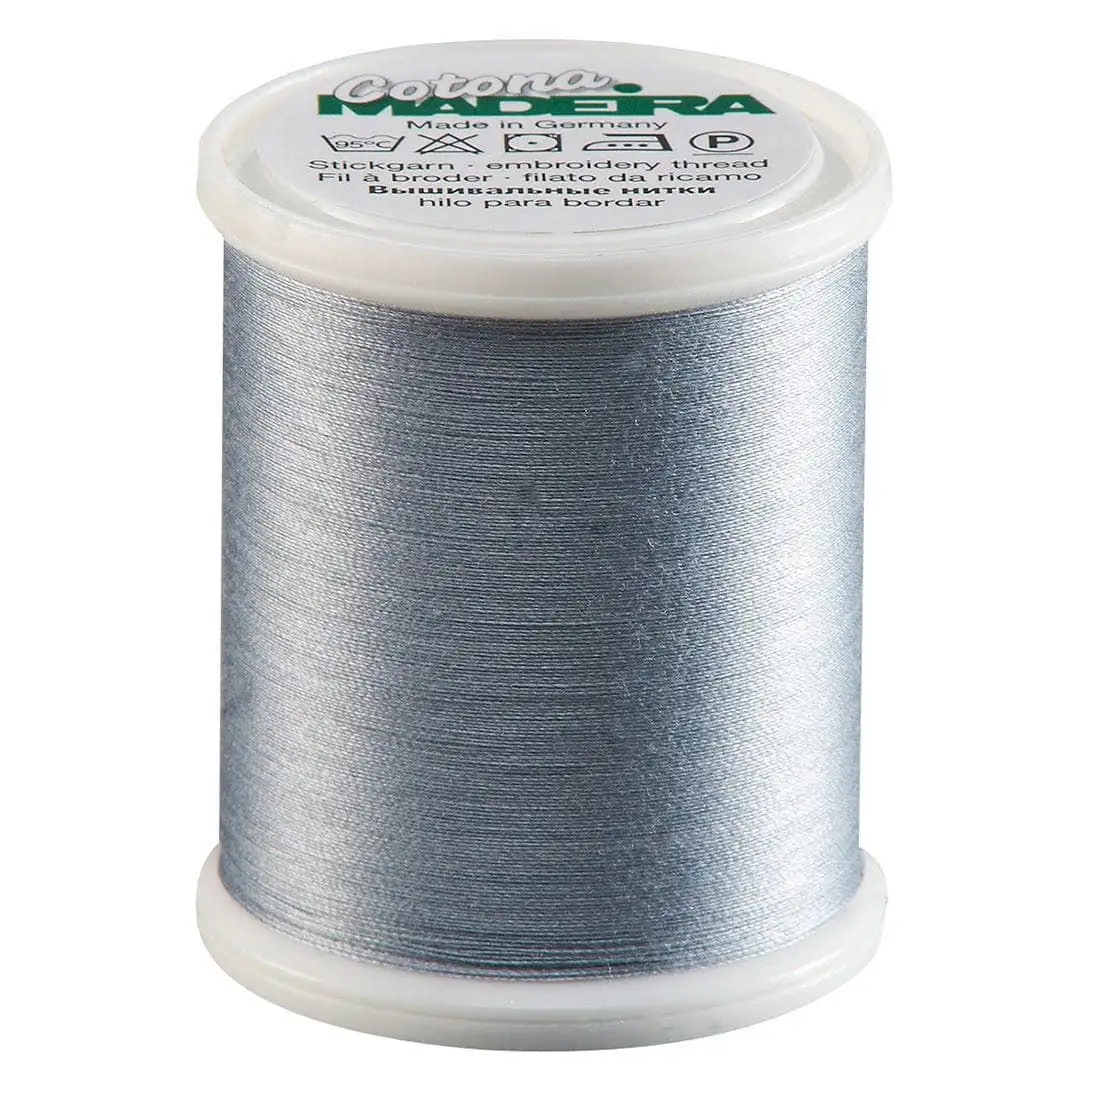 Madeira Cotona 50wt Cotton - 569 Medium Grey